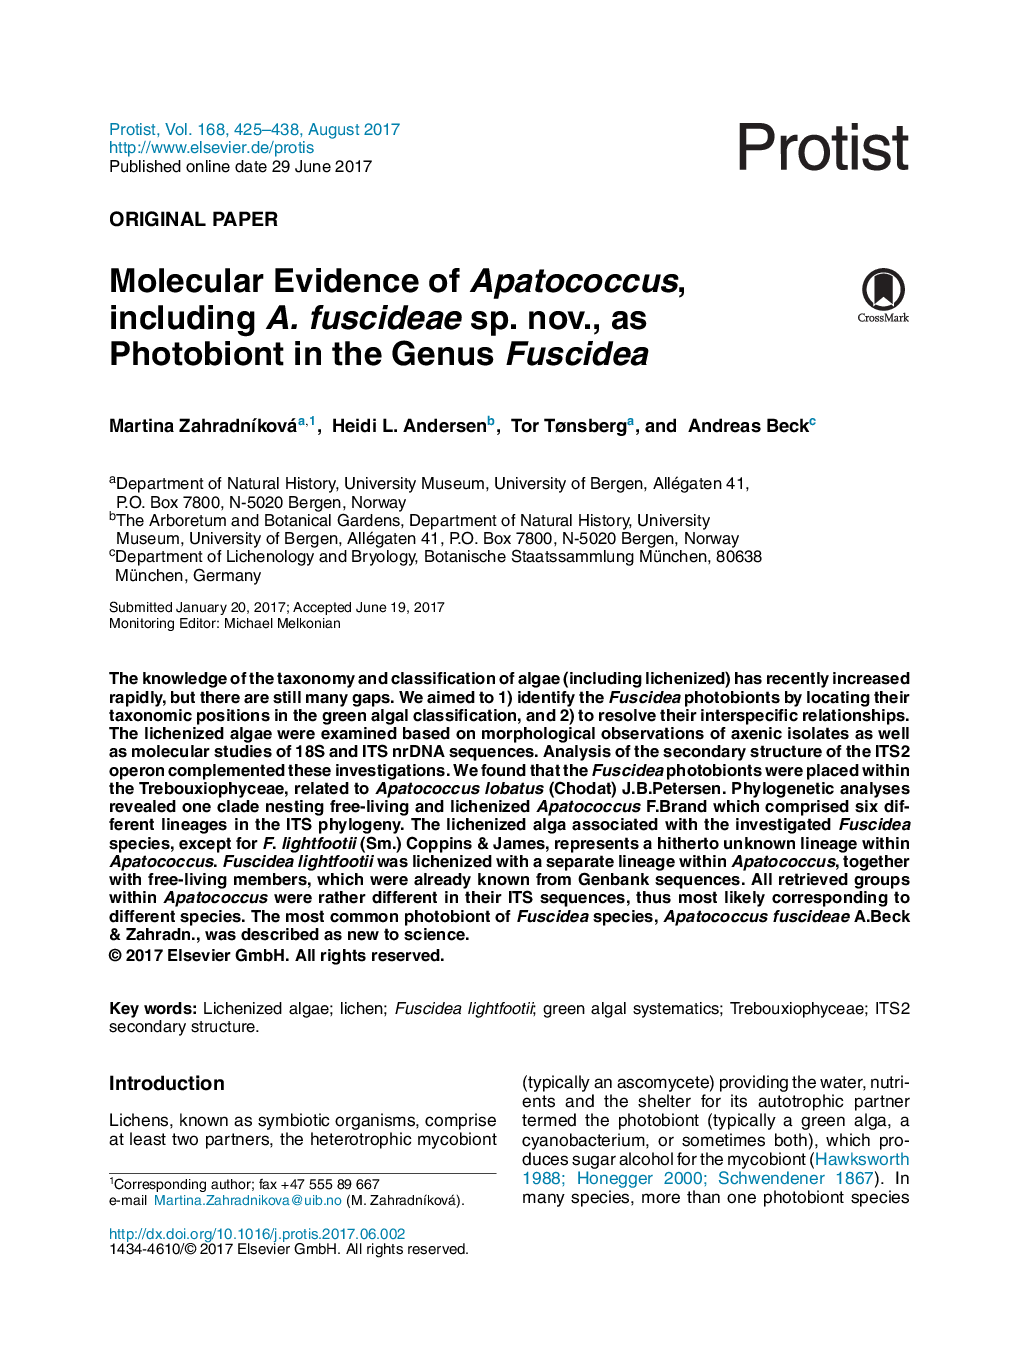 Original PaperMolecular Evidence of Apatococcus, including A. fuscideae sp. nov., as Photobiont in the Genus Fuscidea